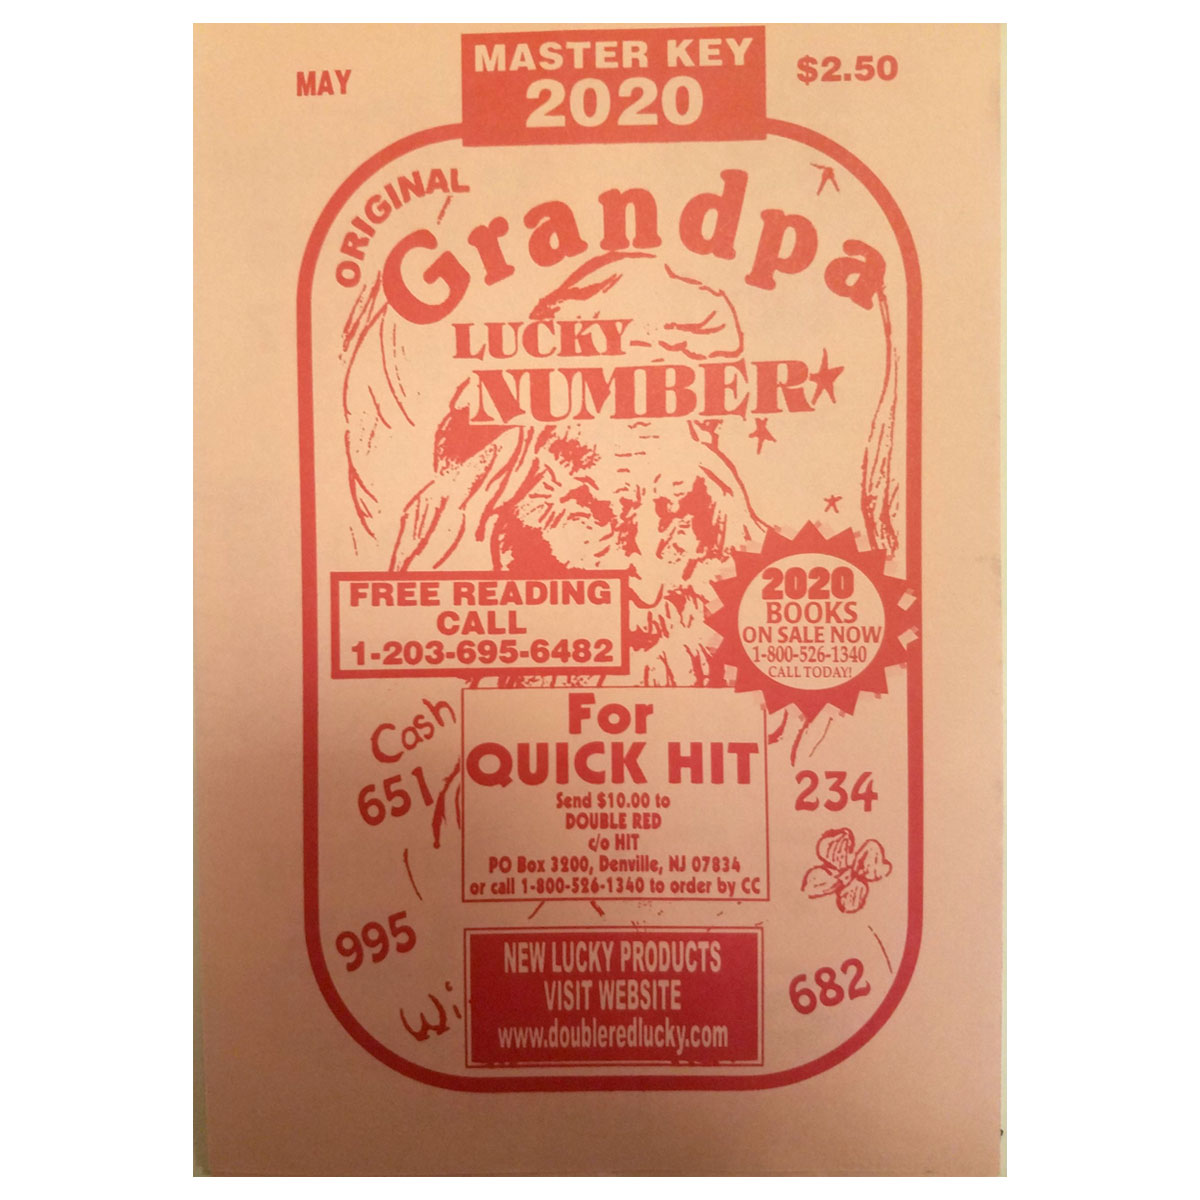 Original Grandpa Lucky Number